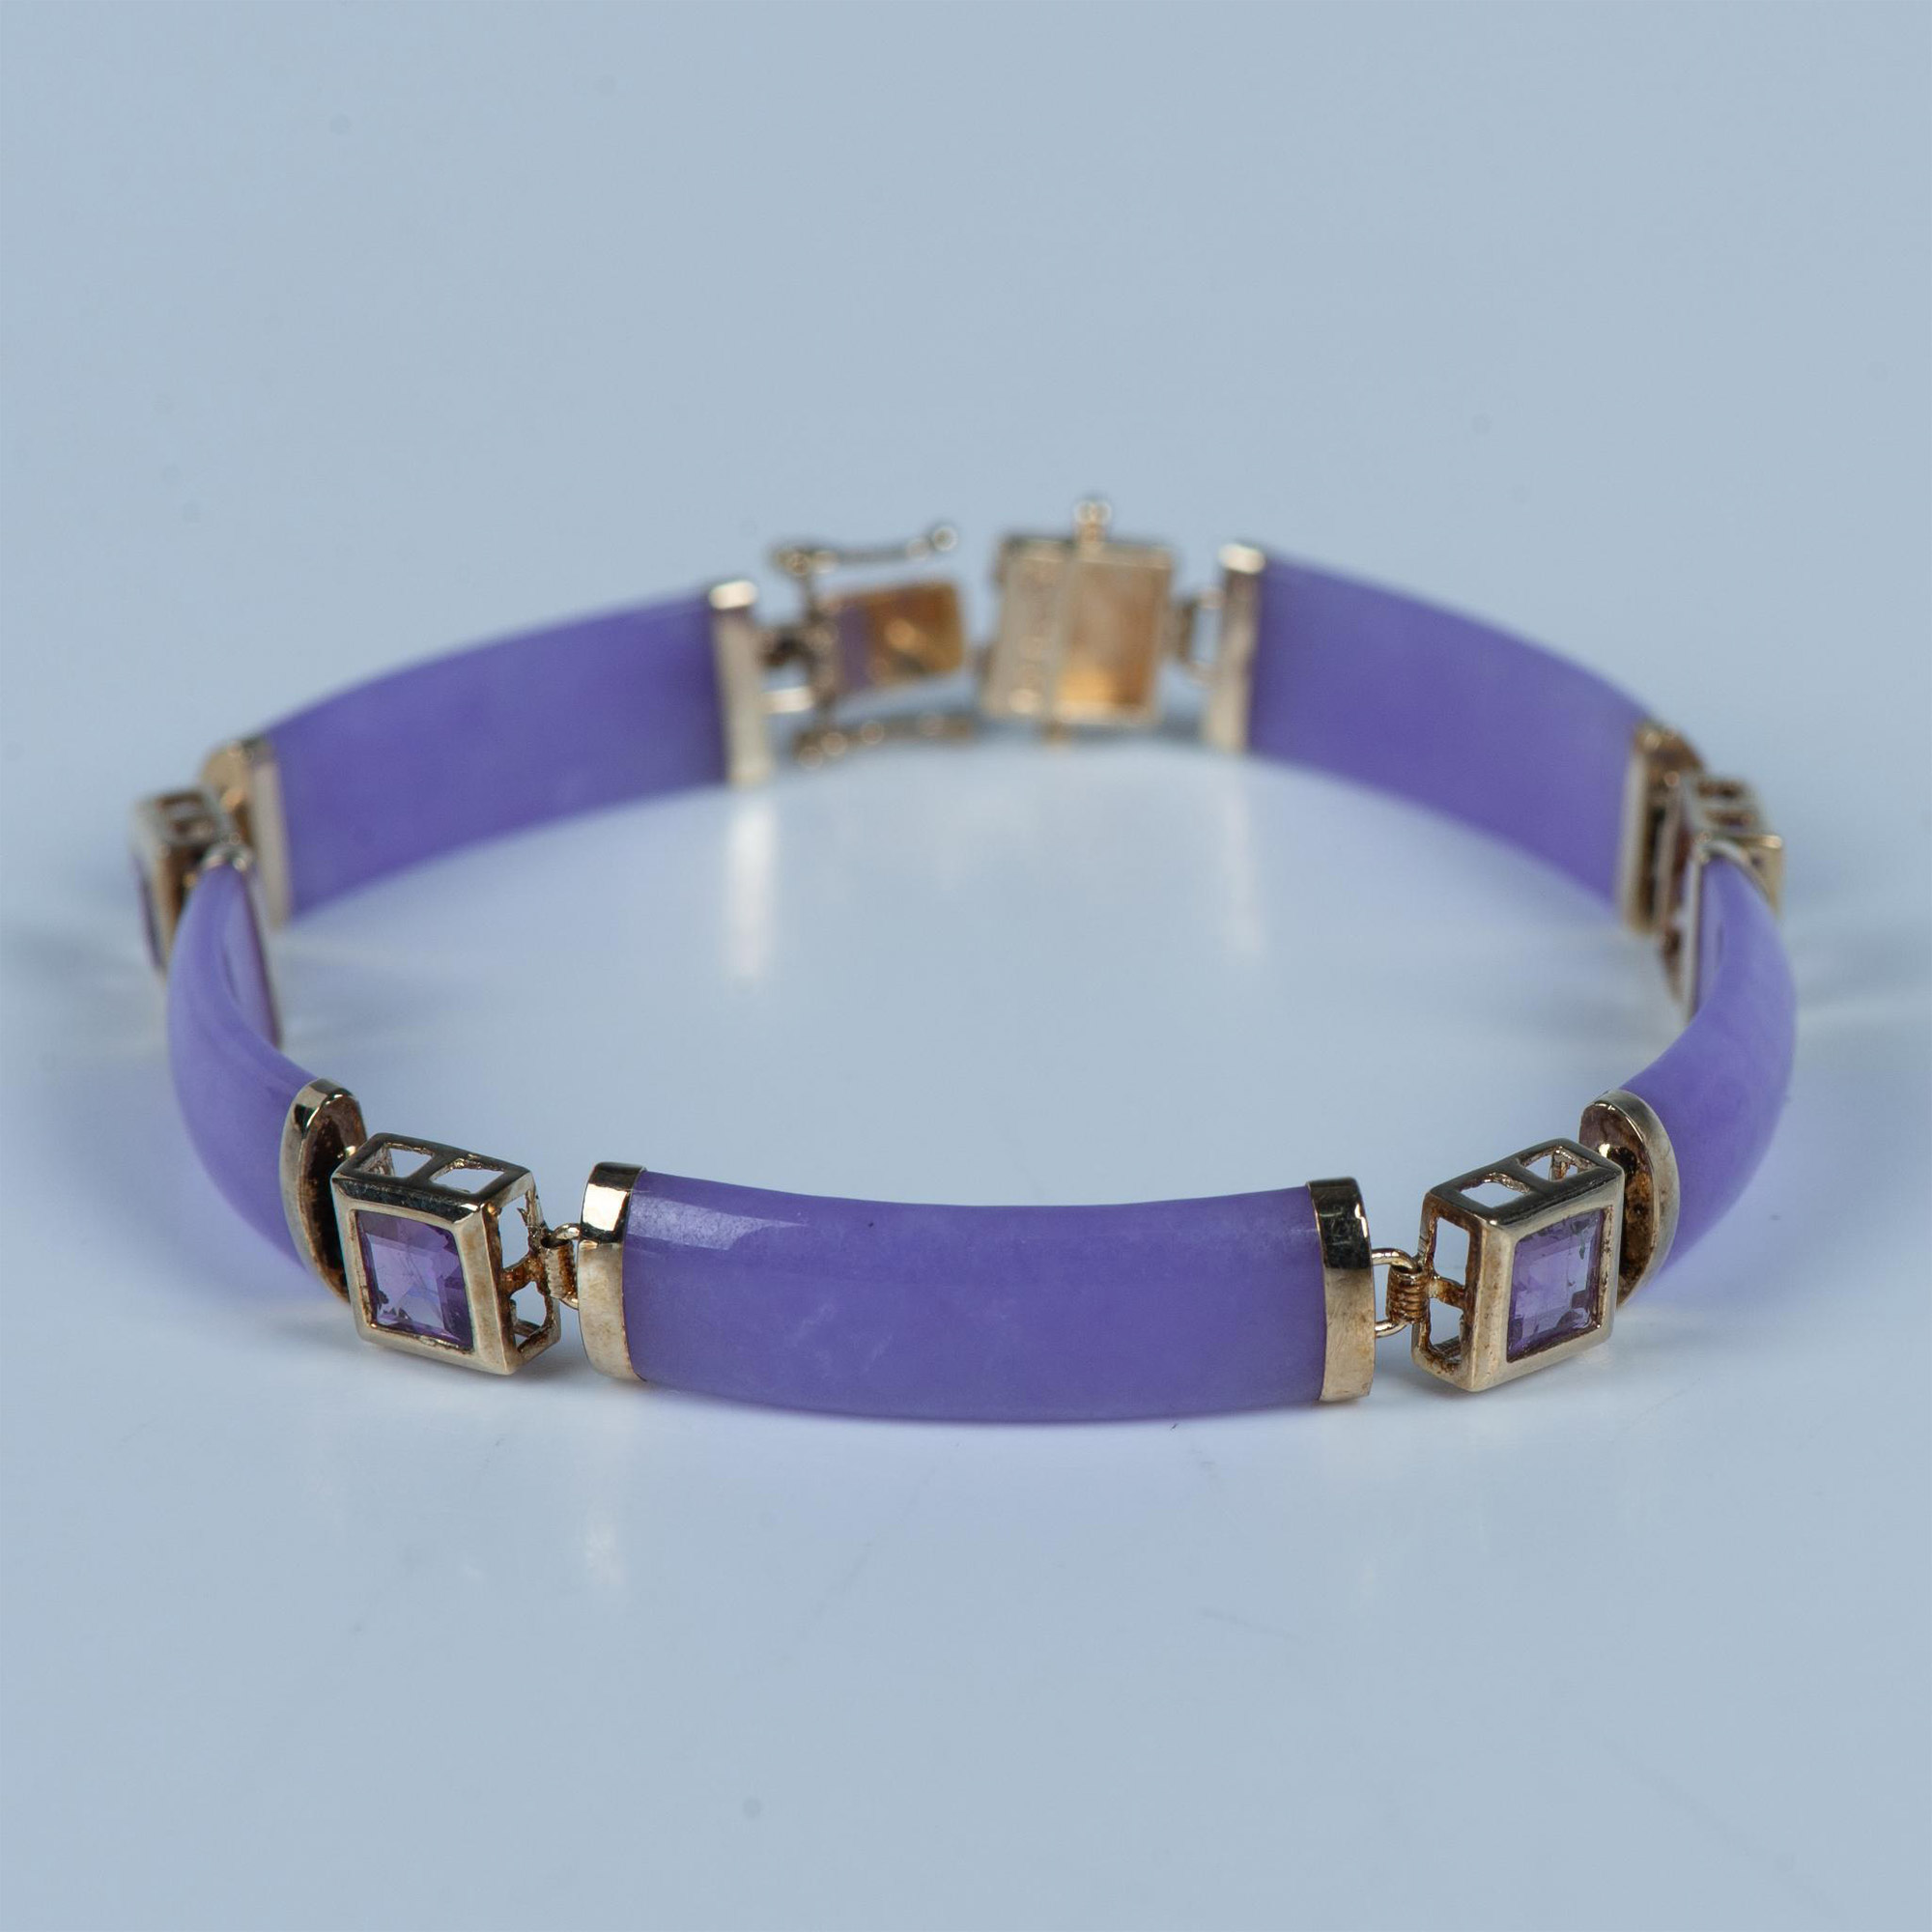 Stunning 14K Gold, Purple Jade, and Amethyst Bracelet